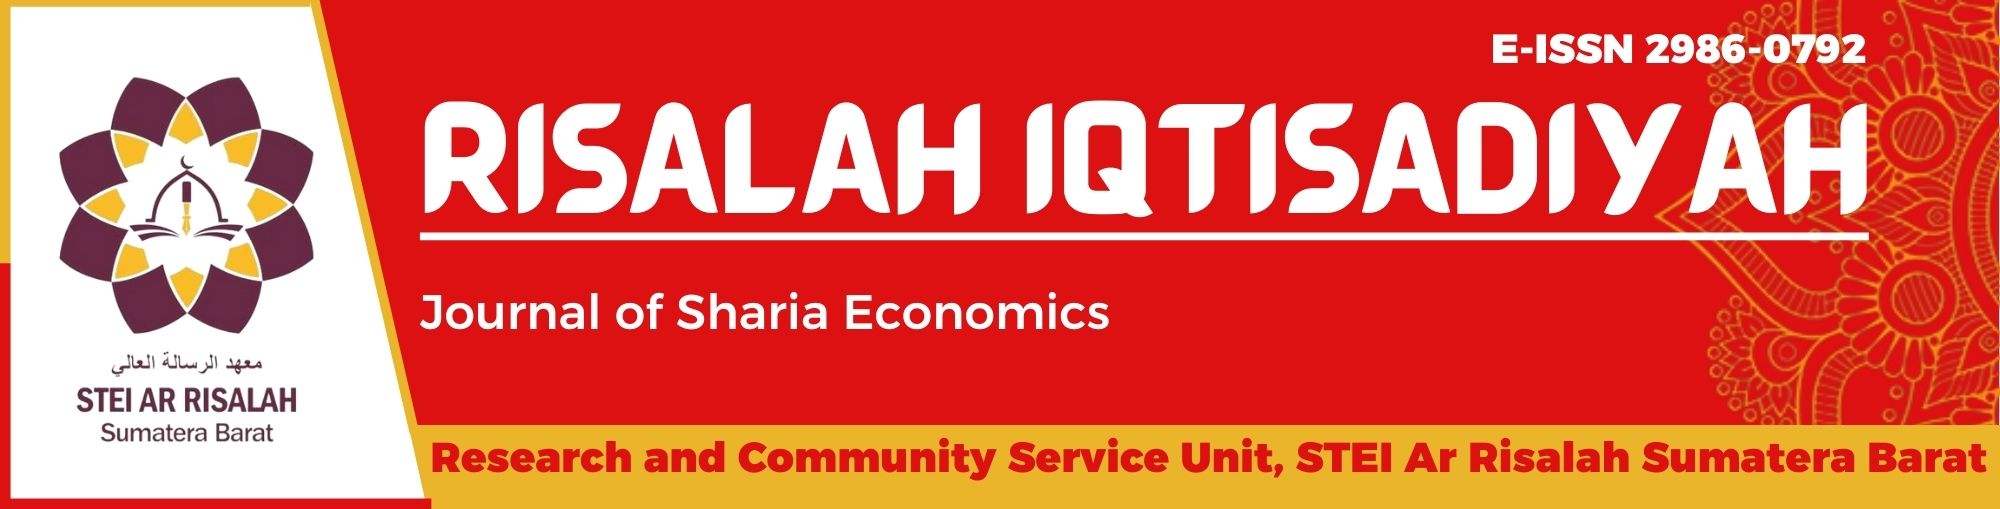 Header Journals RISALAH IQTISADIYAH: Journal of Sharia Economics